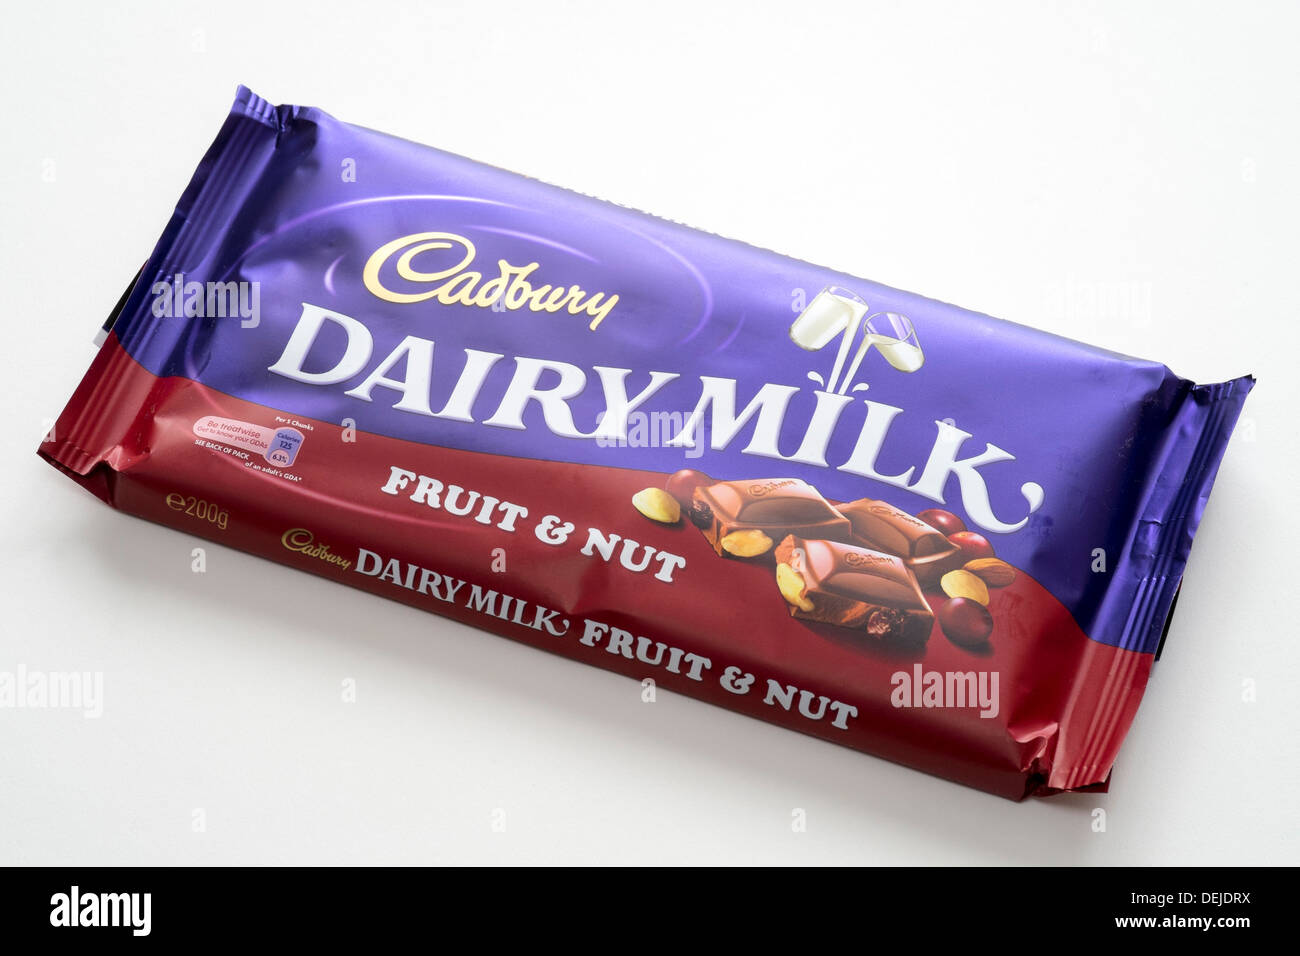 Cadbury Dairy Milk Fruit & Nut Milk Chocolate Bar - 42g